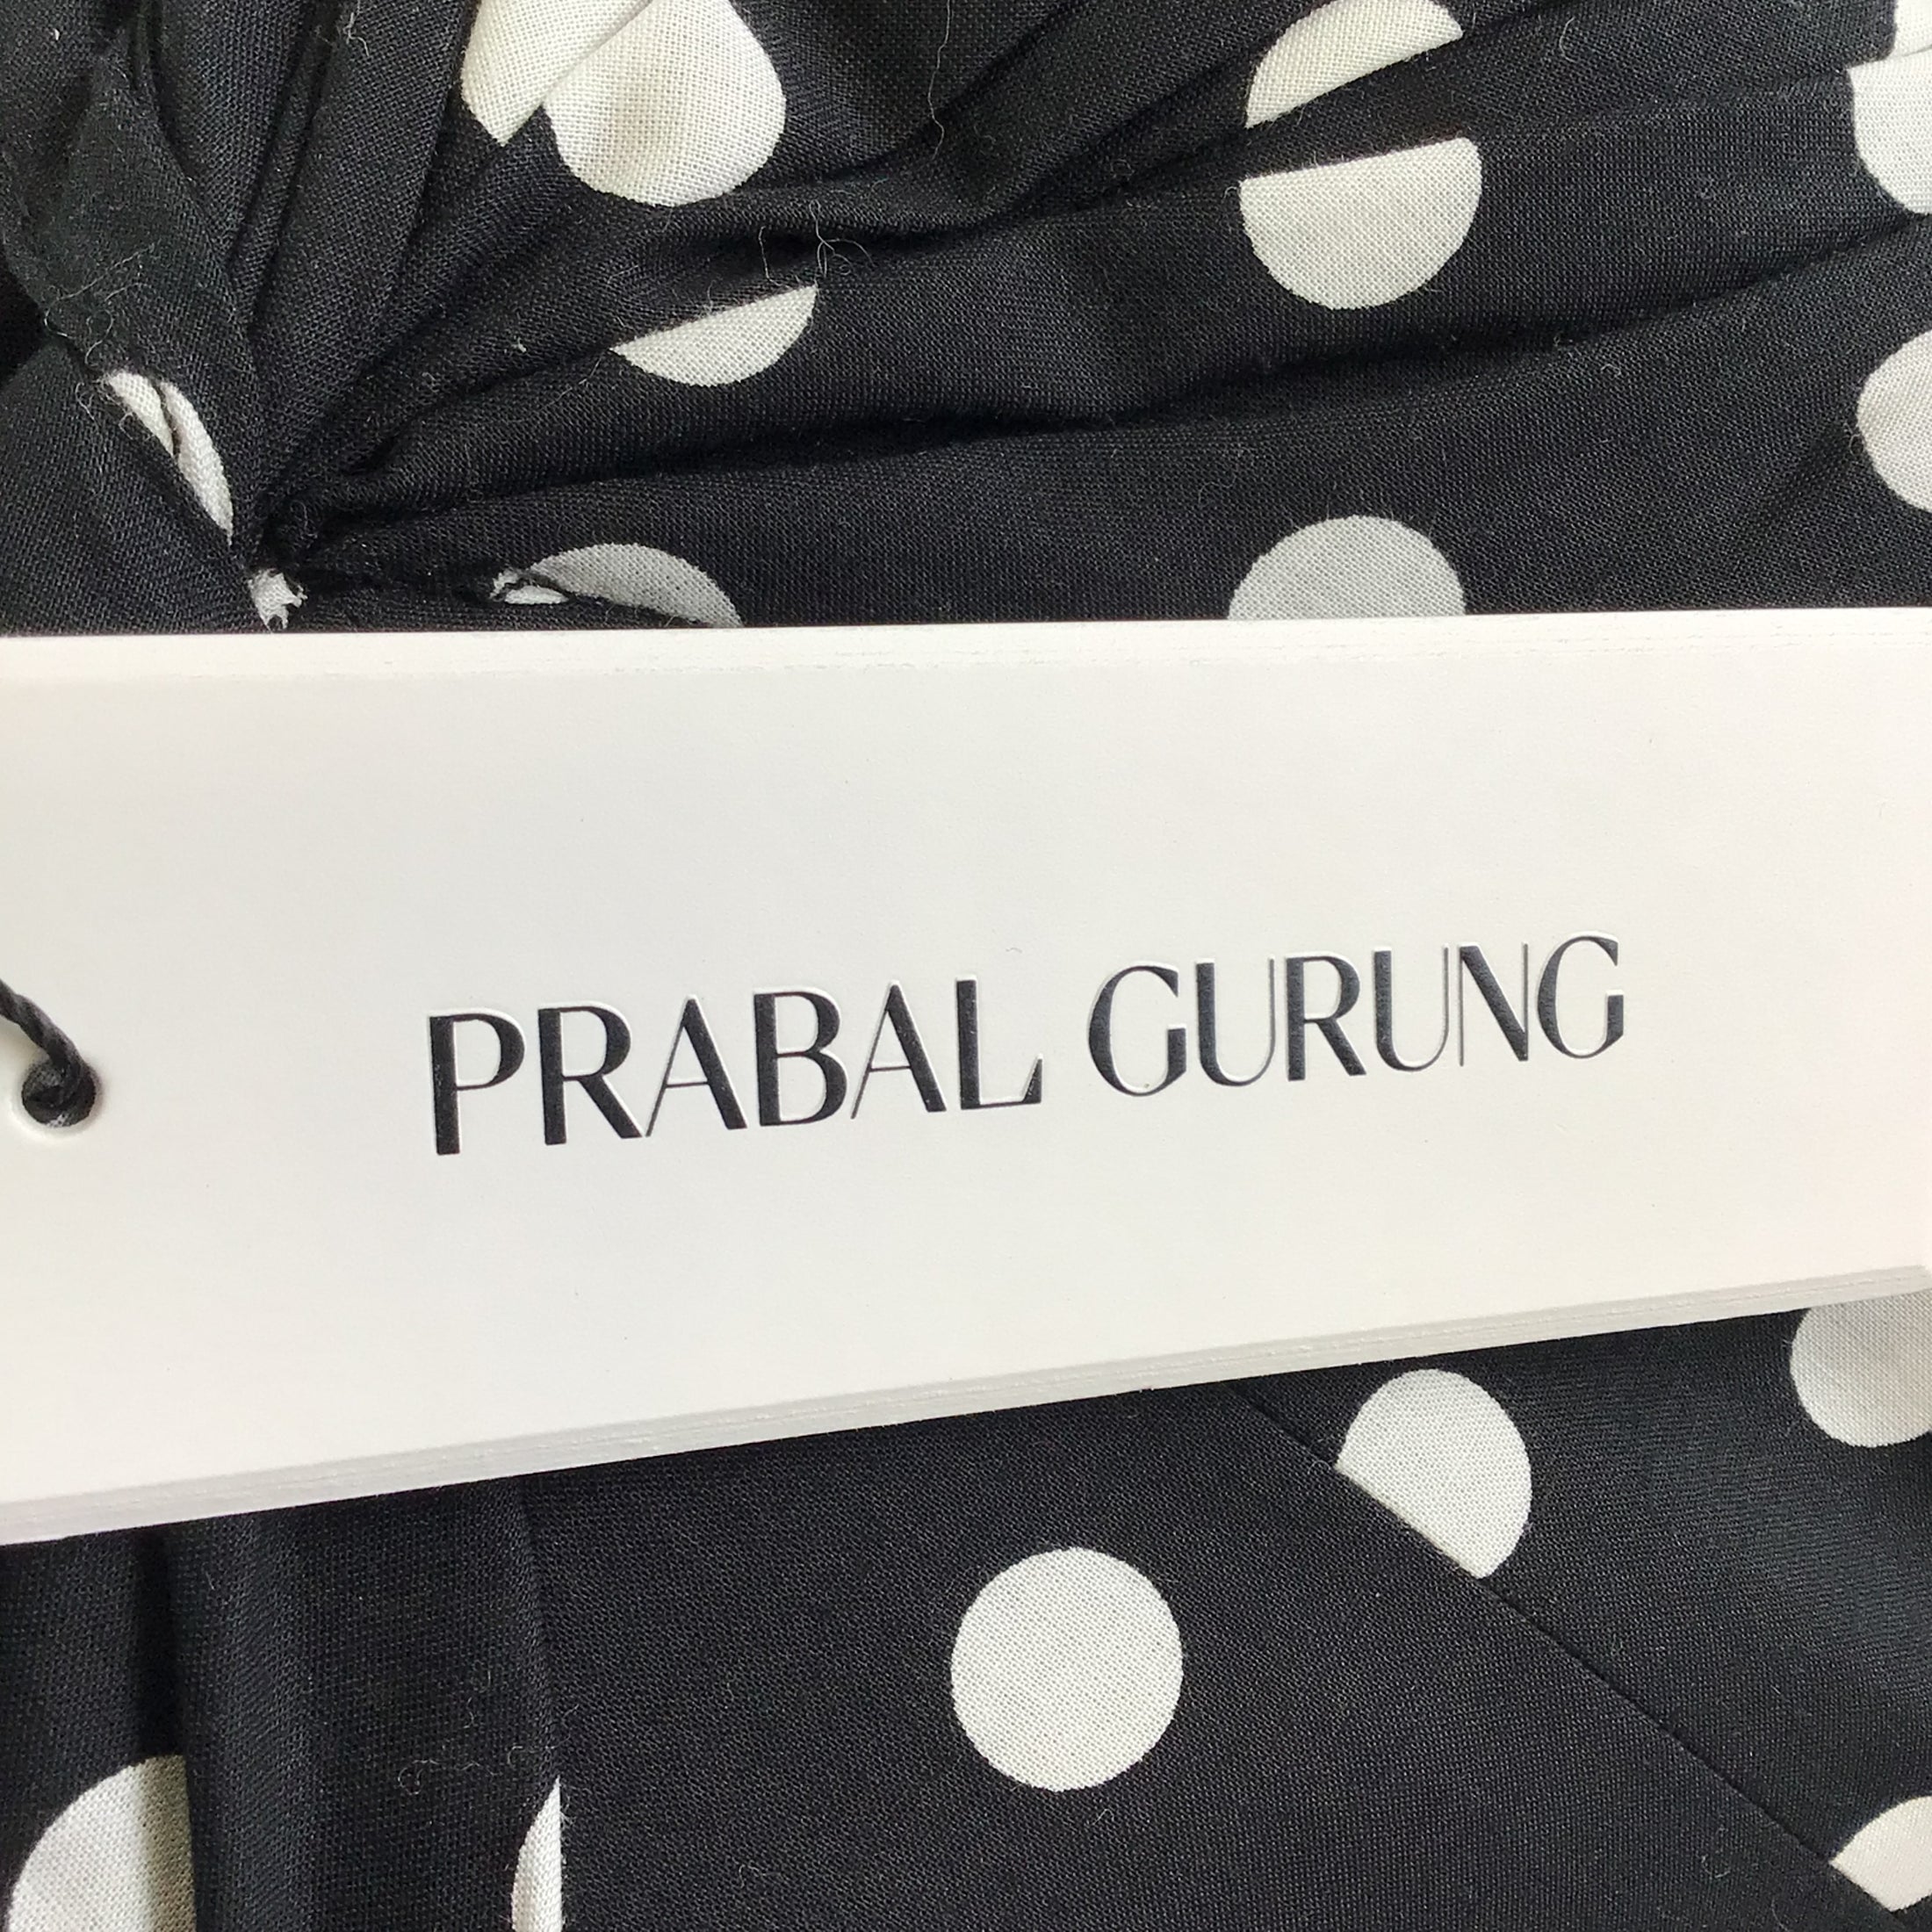 Prabal Gurung Black / White Polka Dot Print Cotton Top